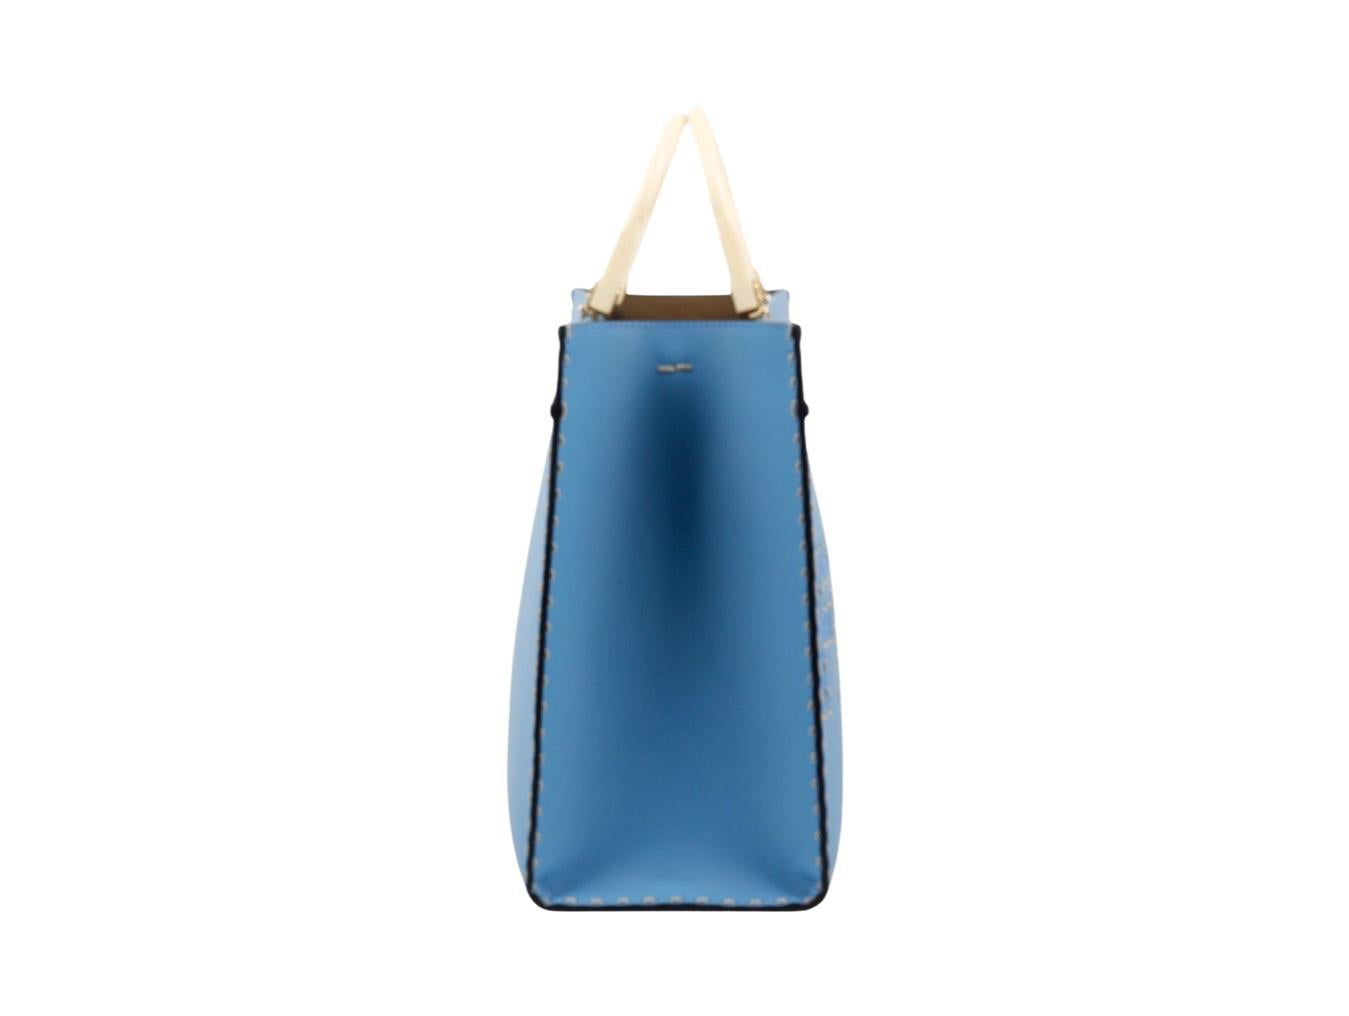 Womens Designer FENDI SUNSHINE MEDIUM BLUE SHOPPER TOTE BAG In Excellent Condition For Sale In London, GB